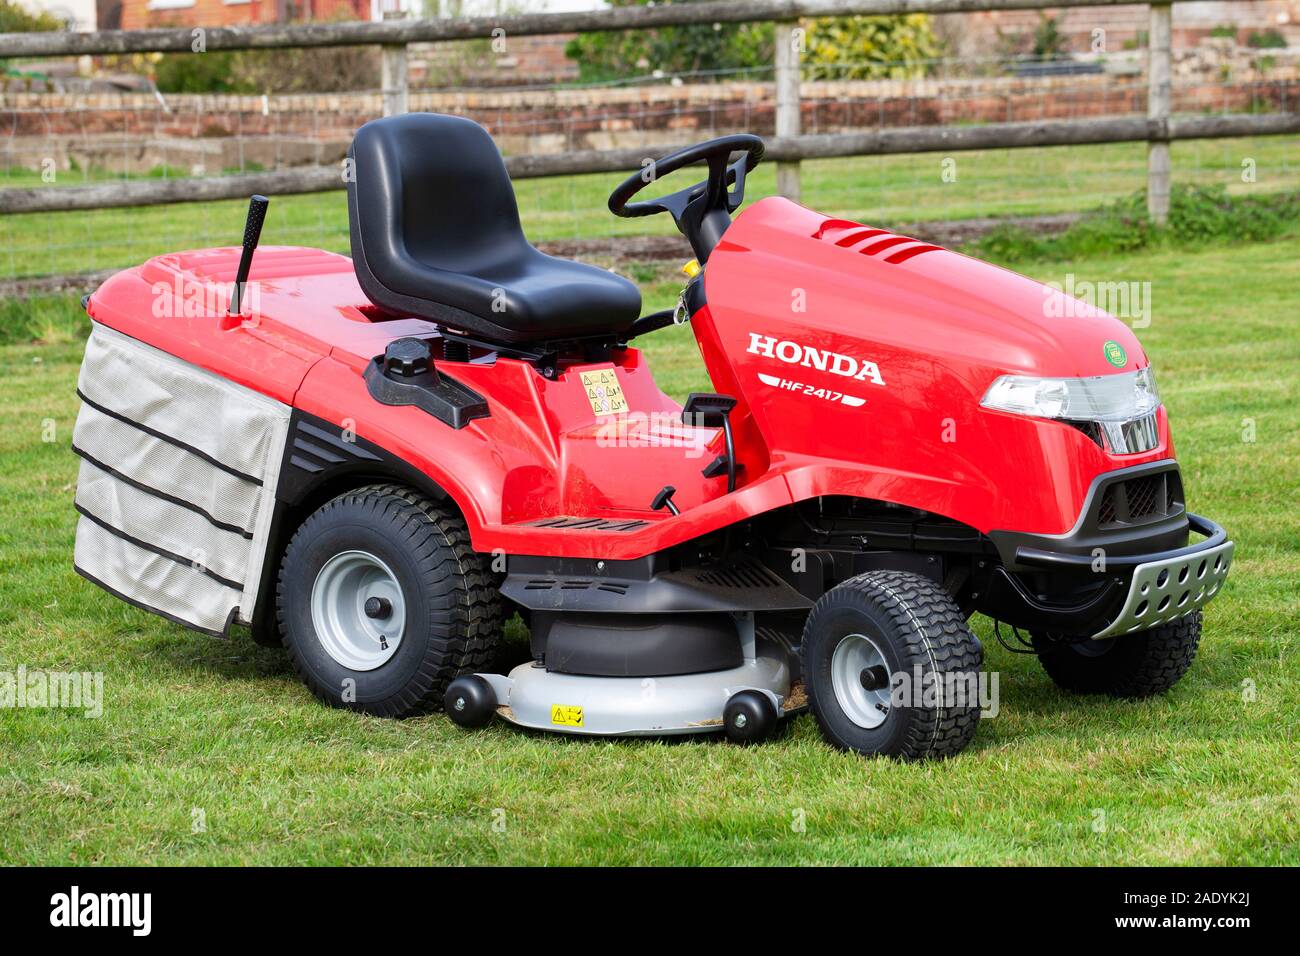 Honda HF2417 Ride on mower lawn tractor Stock Photo